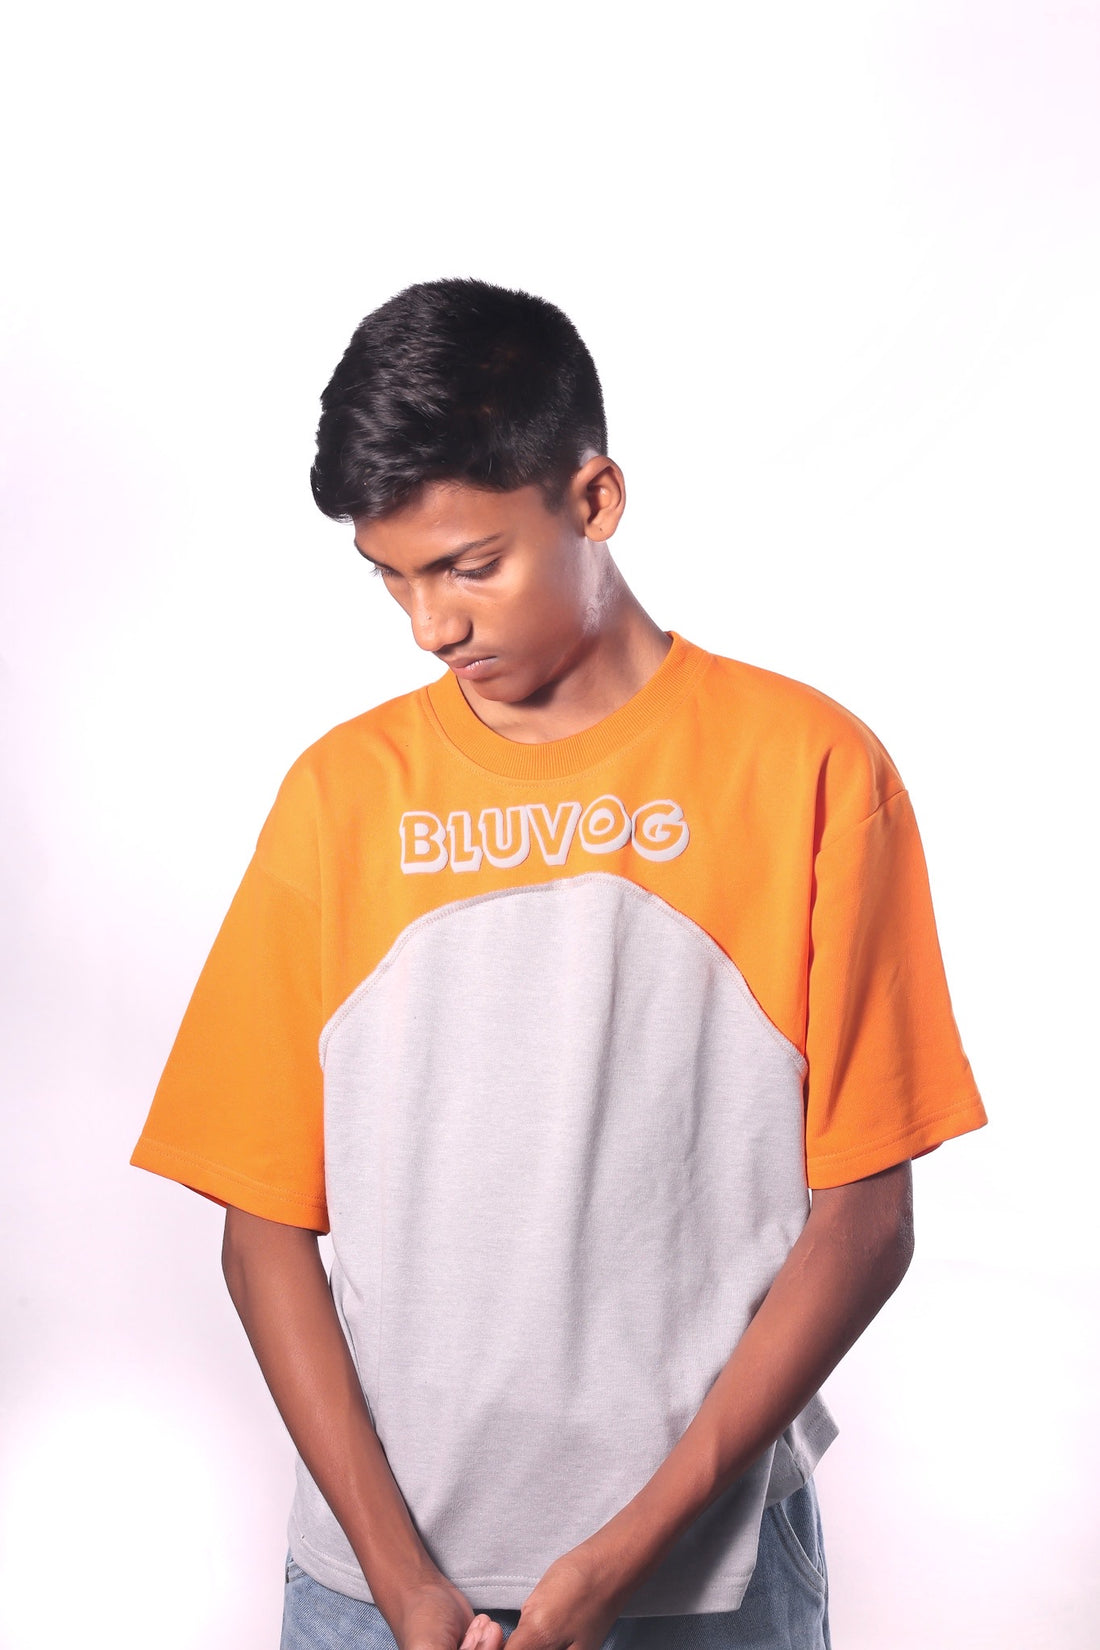 T shirts - Bluvog